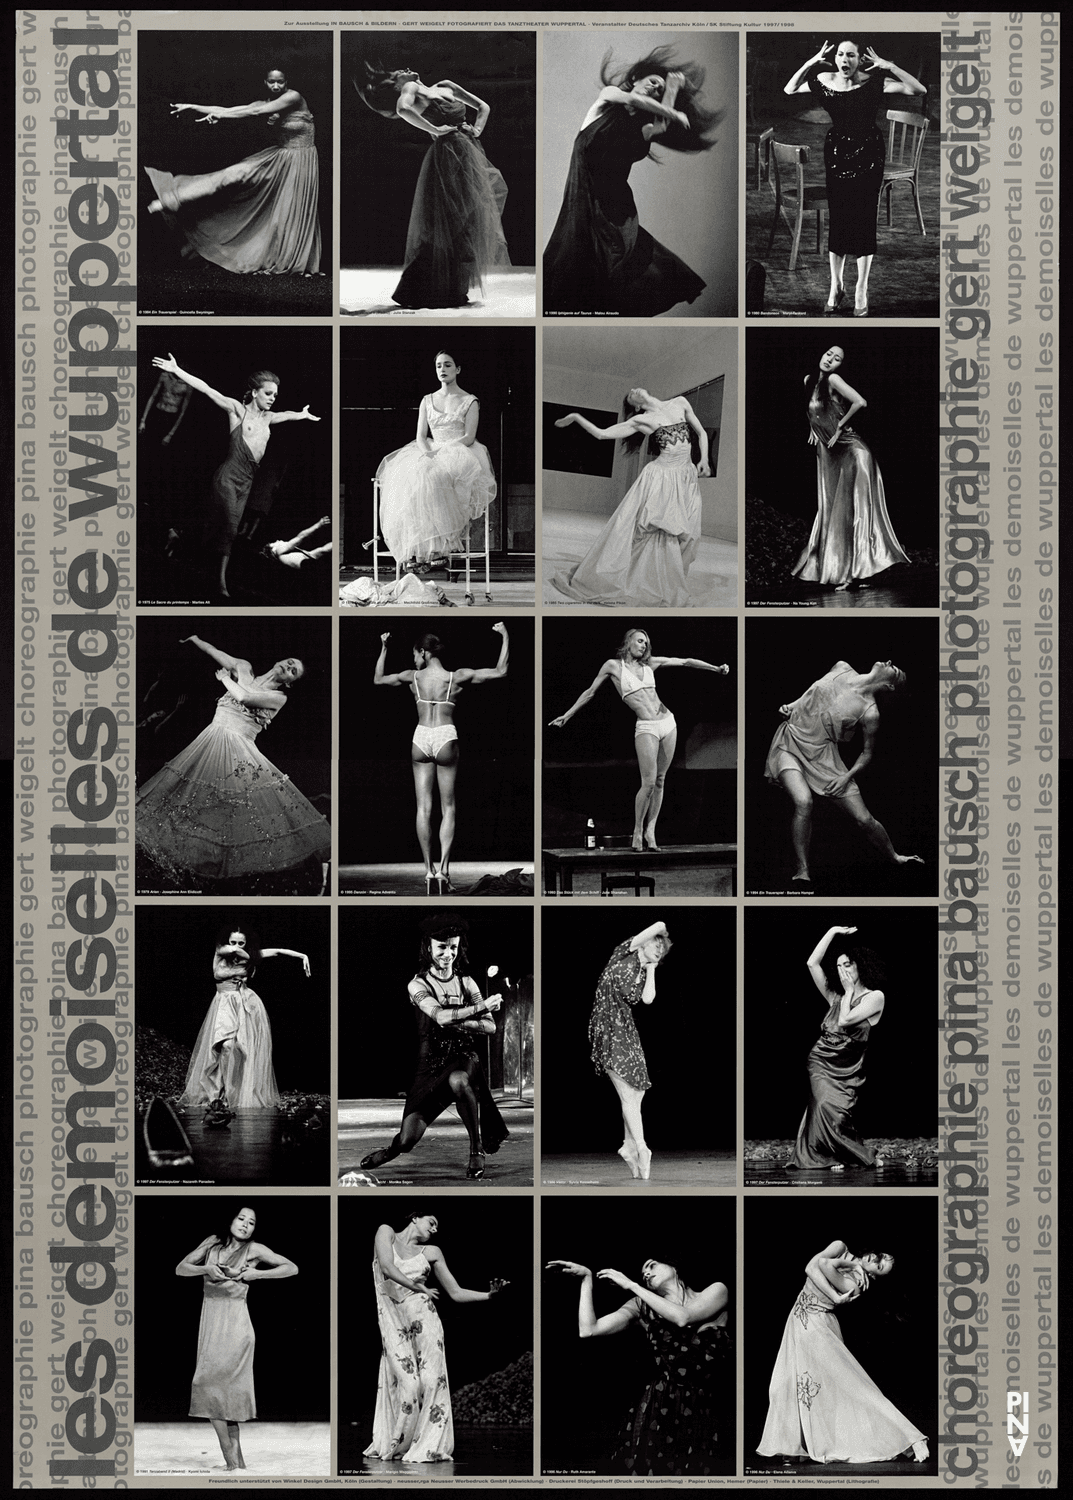 Poster for the photography exhibition “In Bausch & Bildern“, season 1997/98